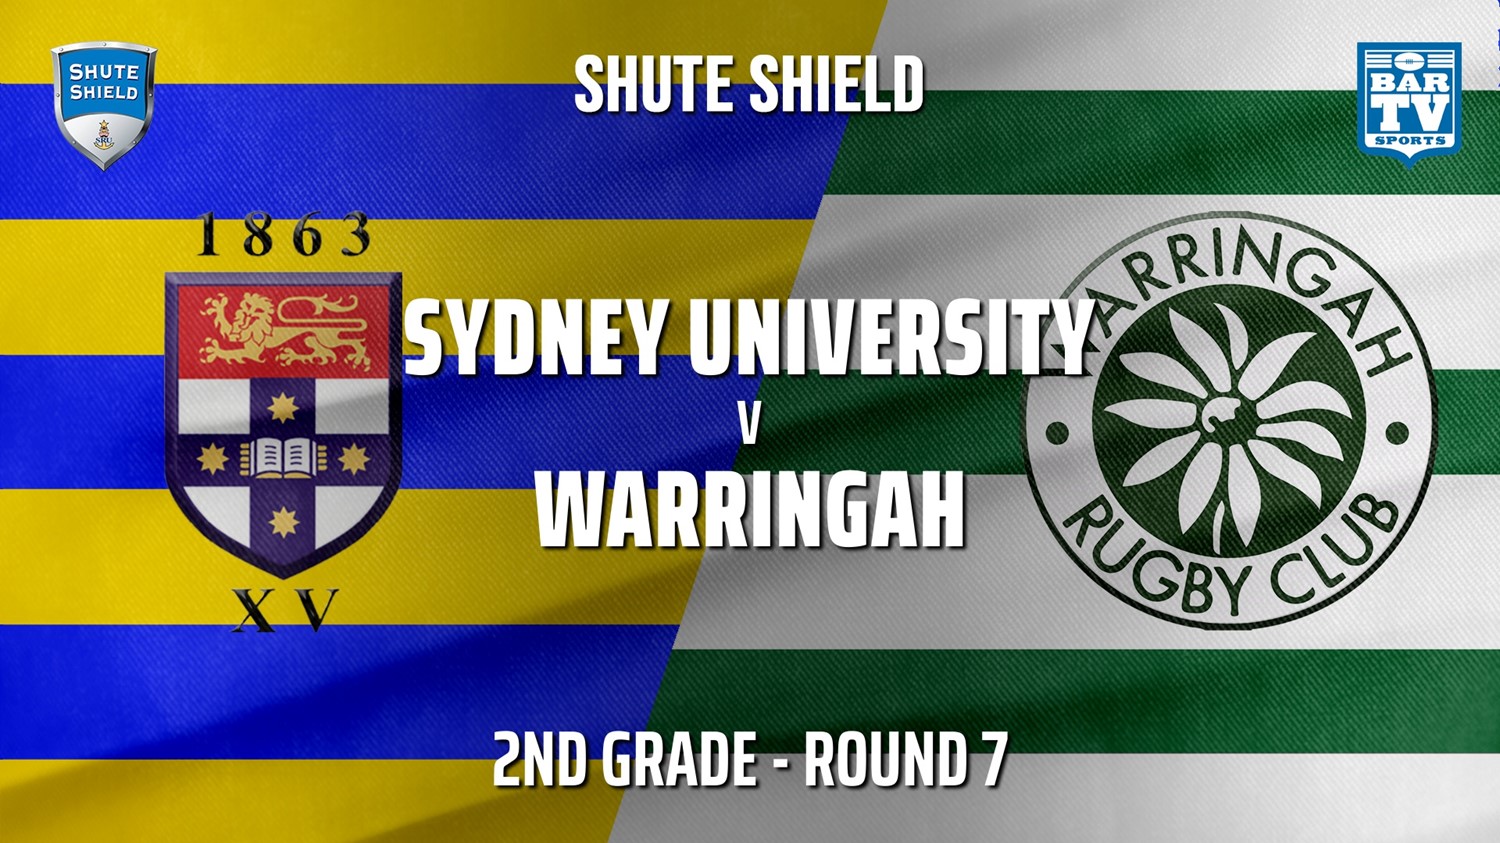 210522-Shute Shield Round 7 - 2nd Grade - Sydney University v Warringah Slate Image